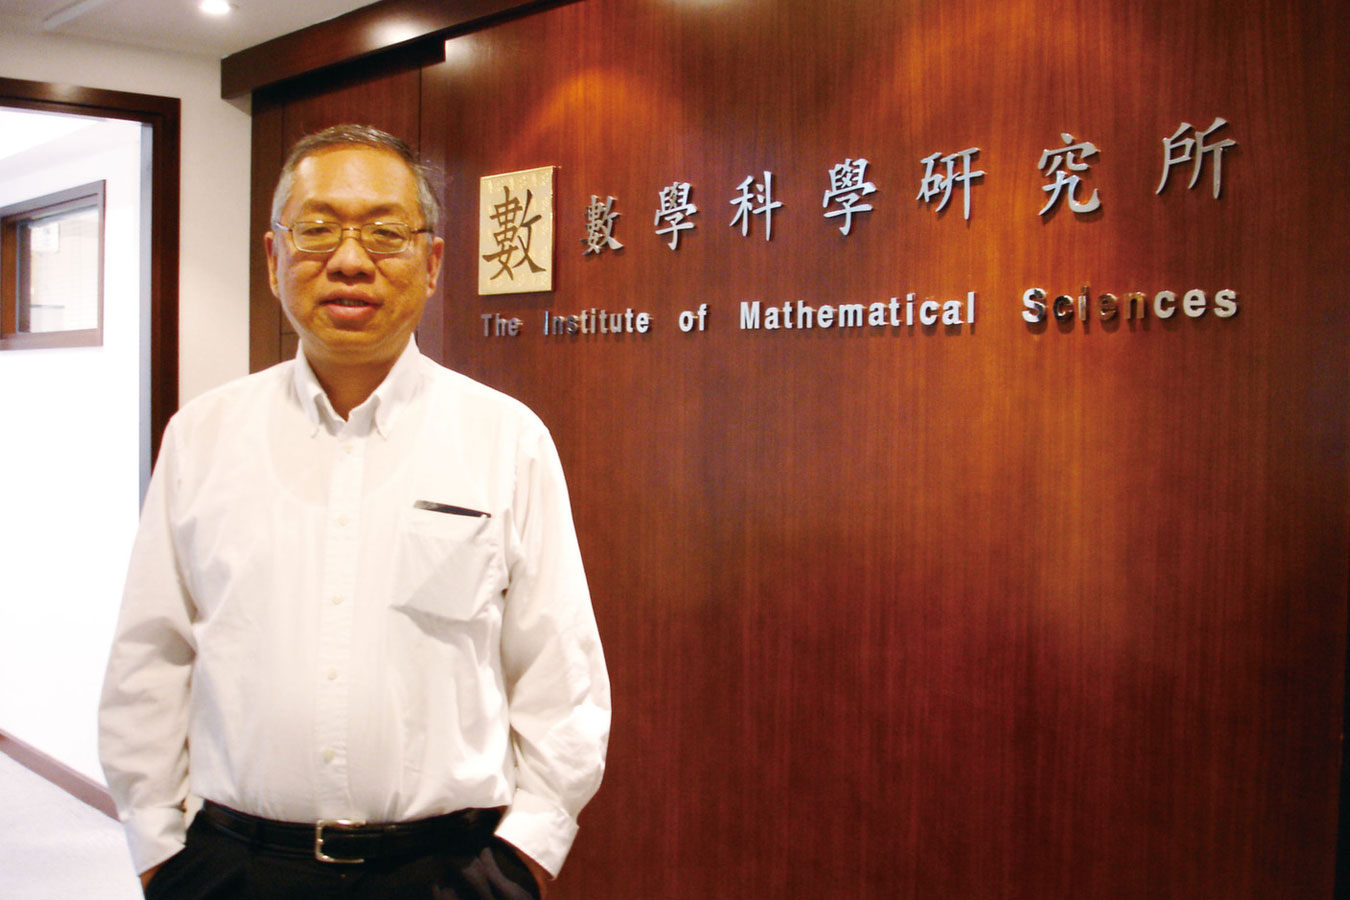 Professor Yau Shing-tung